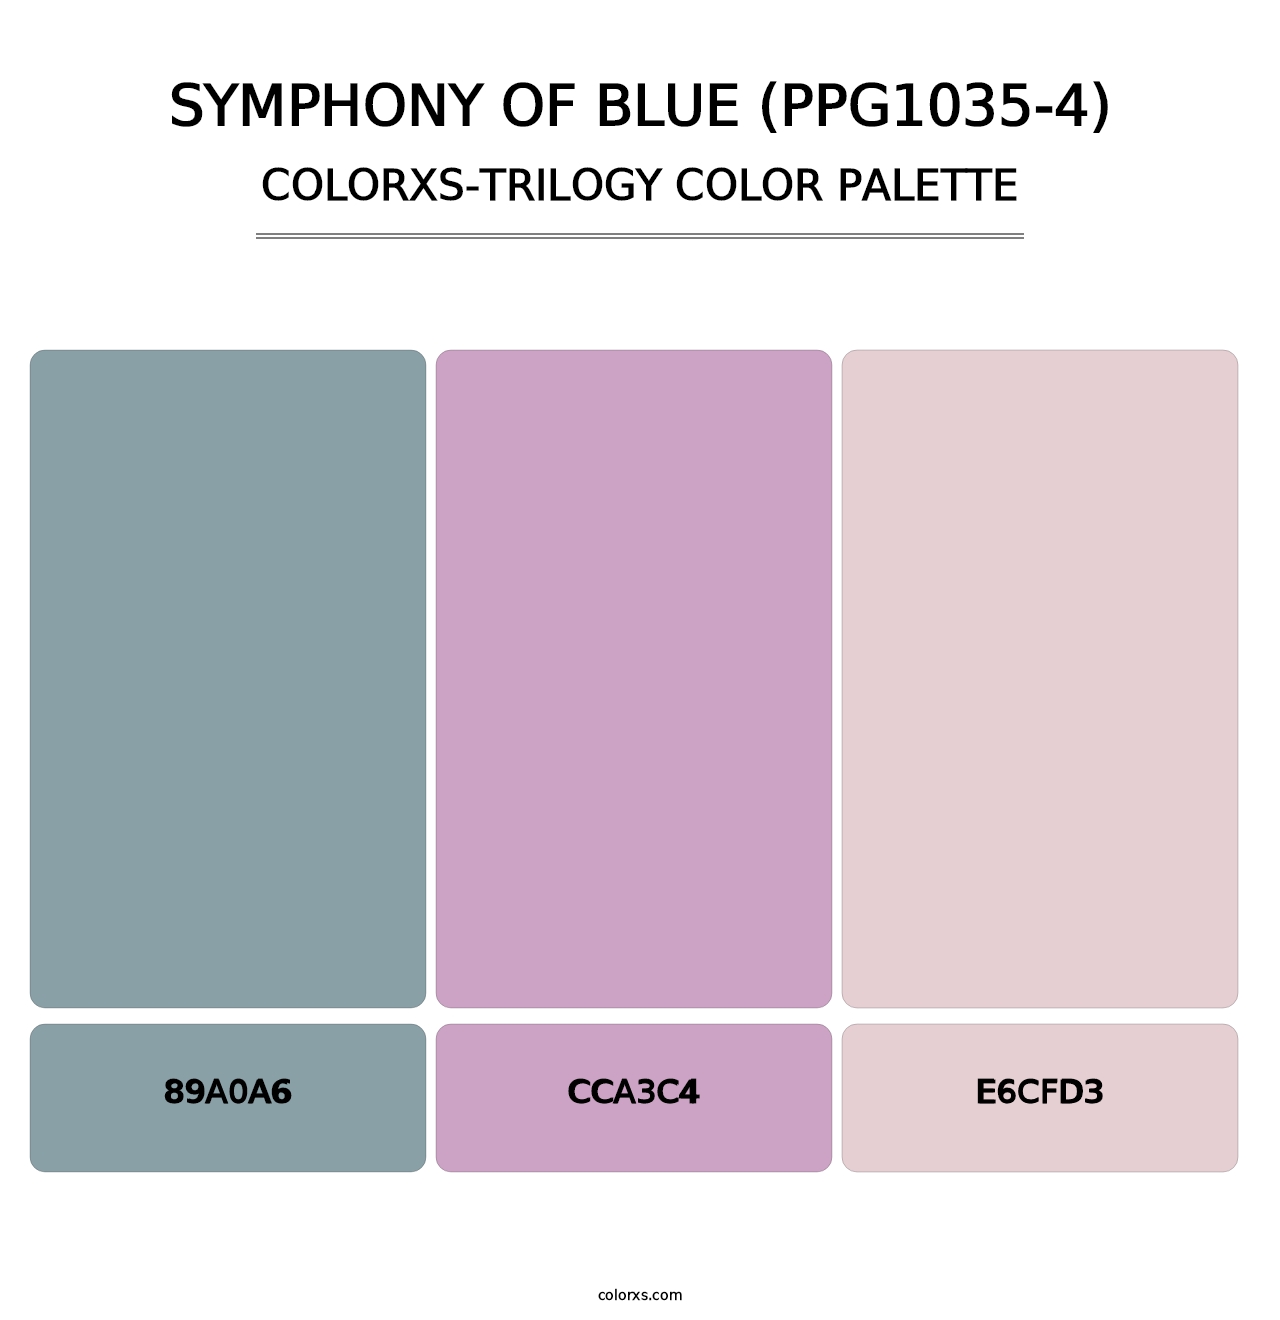 Symphony Of Blue (PPG1035-4) - Colorxs Trilogy Palette